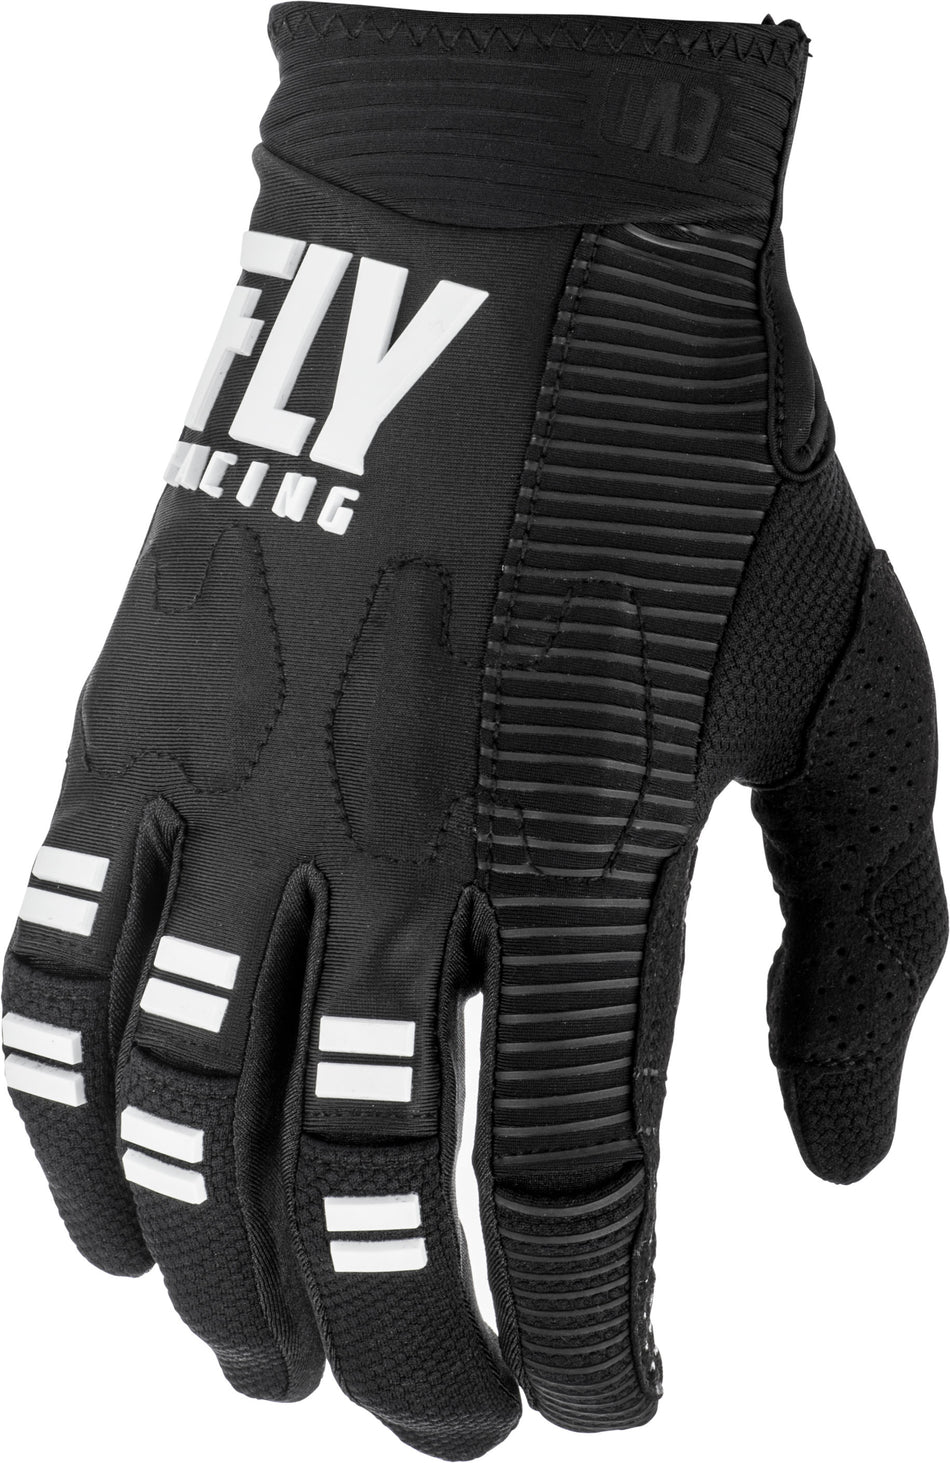 FLY RACING Evolution Dst Gloves Black/White Sz 13 372-11013